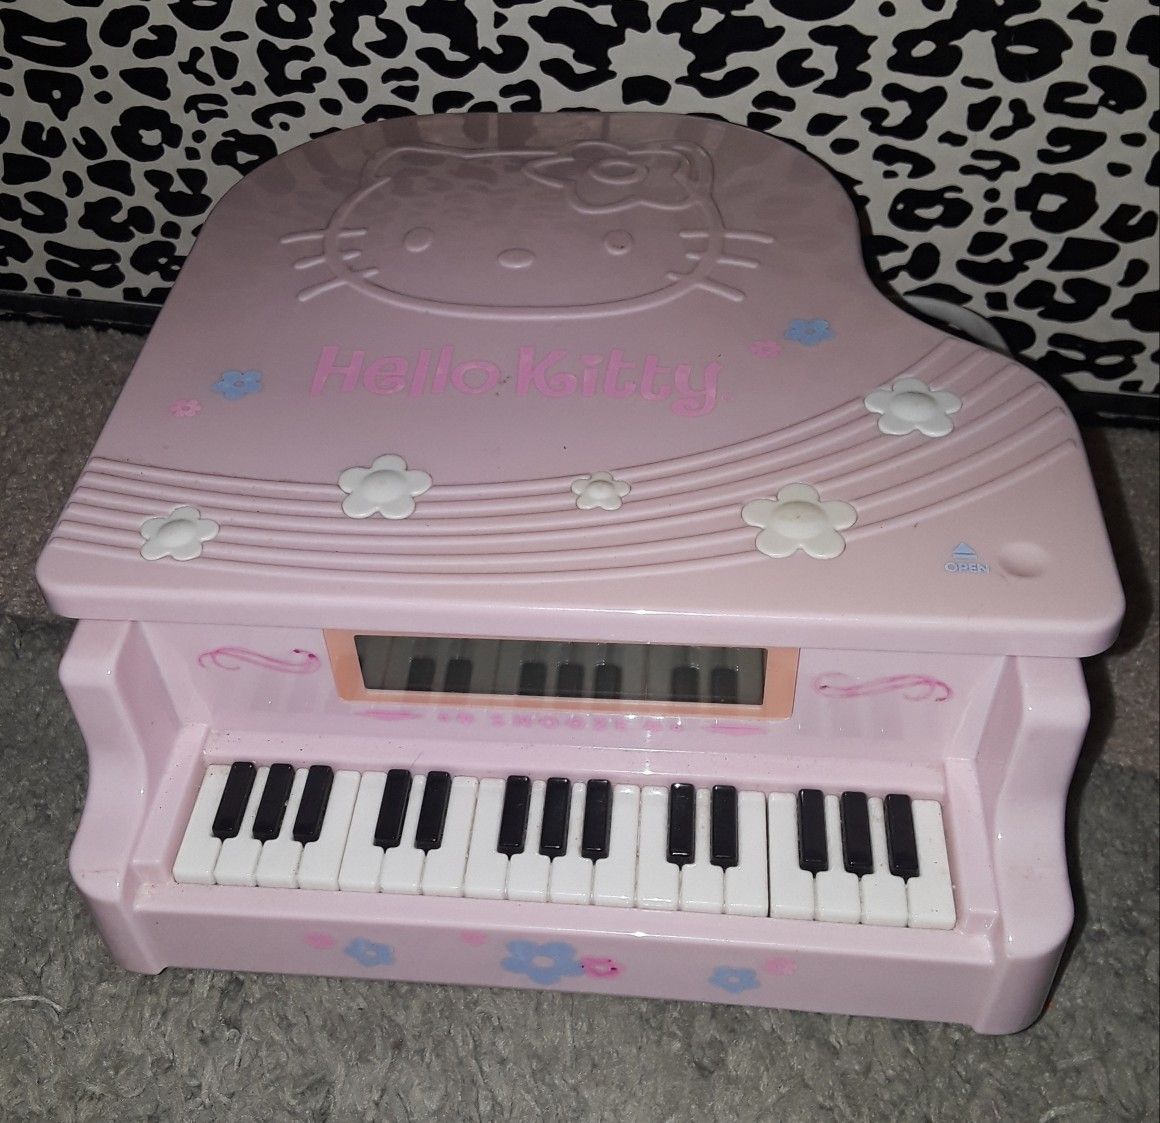 Hello Kitty Radio Alarm Clock